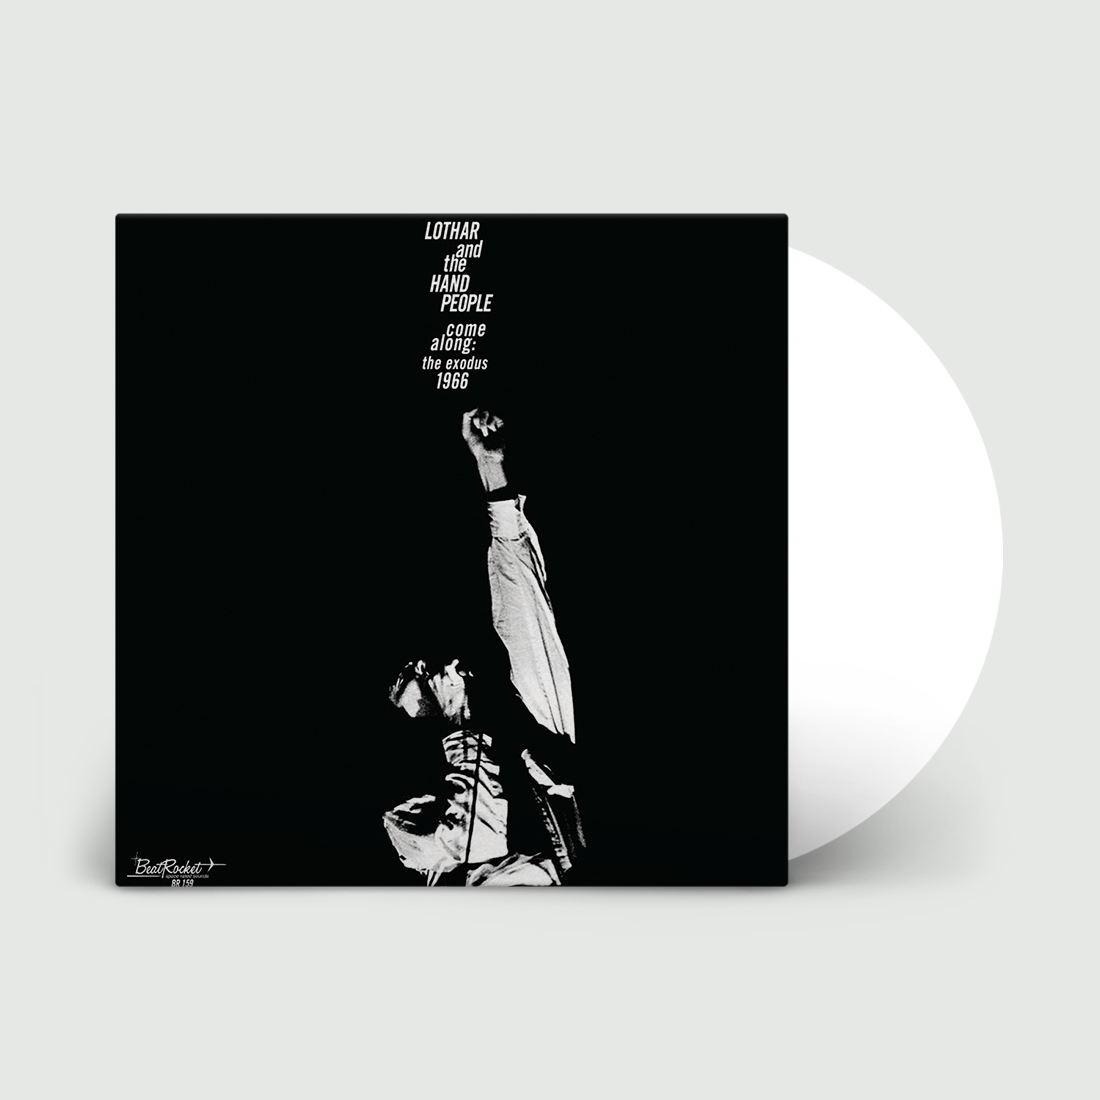 Come Along - The Exodus 1966: Limited Edition White Vinyl LP